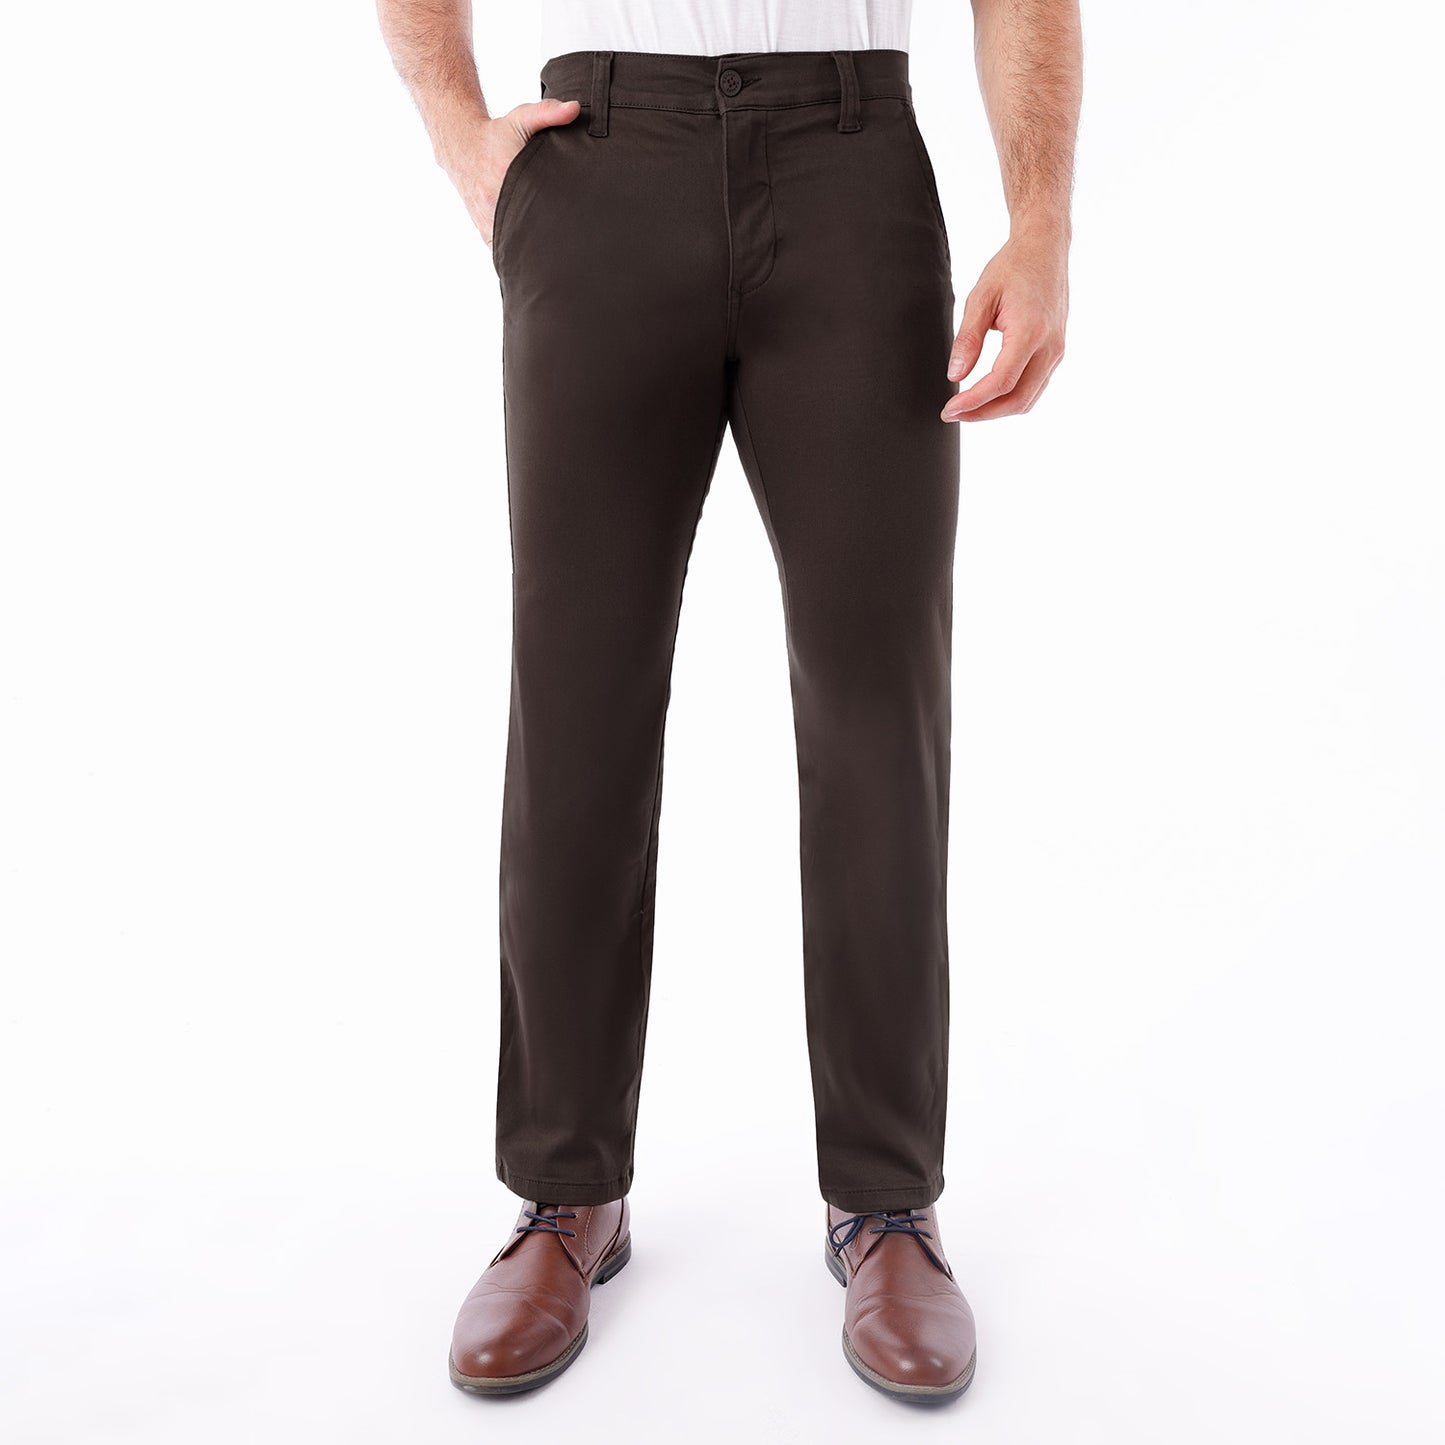 Pantalon Drill Hombre Satinado Regular Fit Marrón - 230885